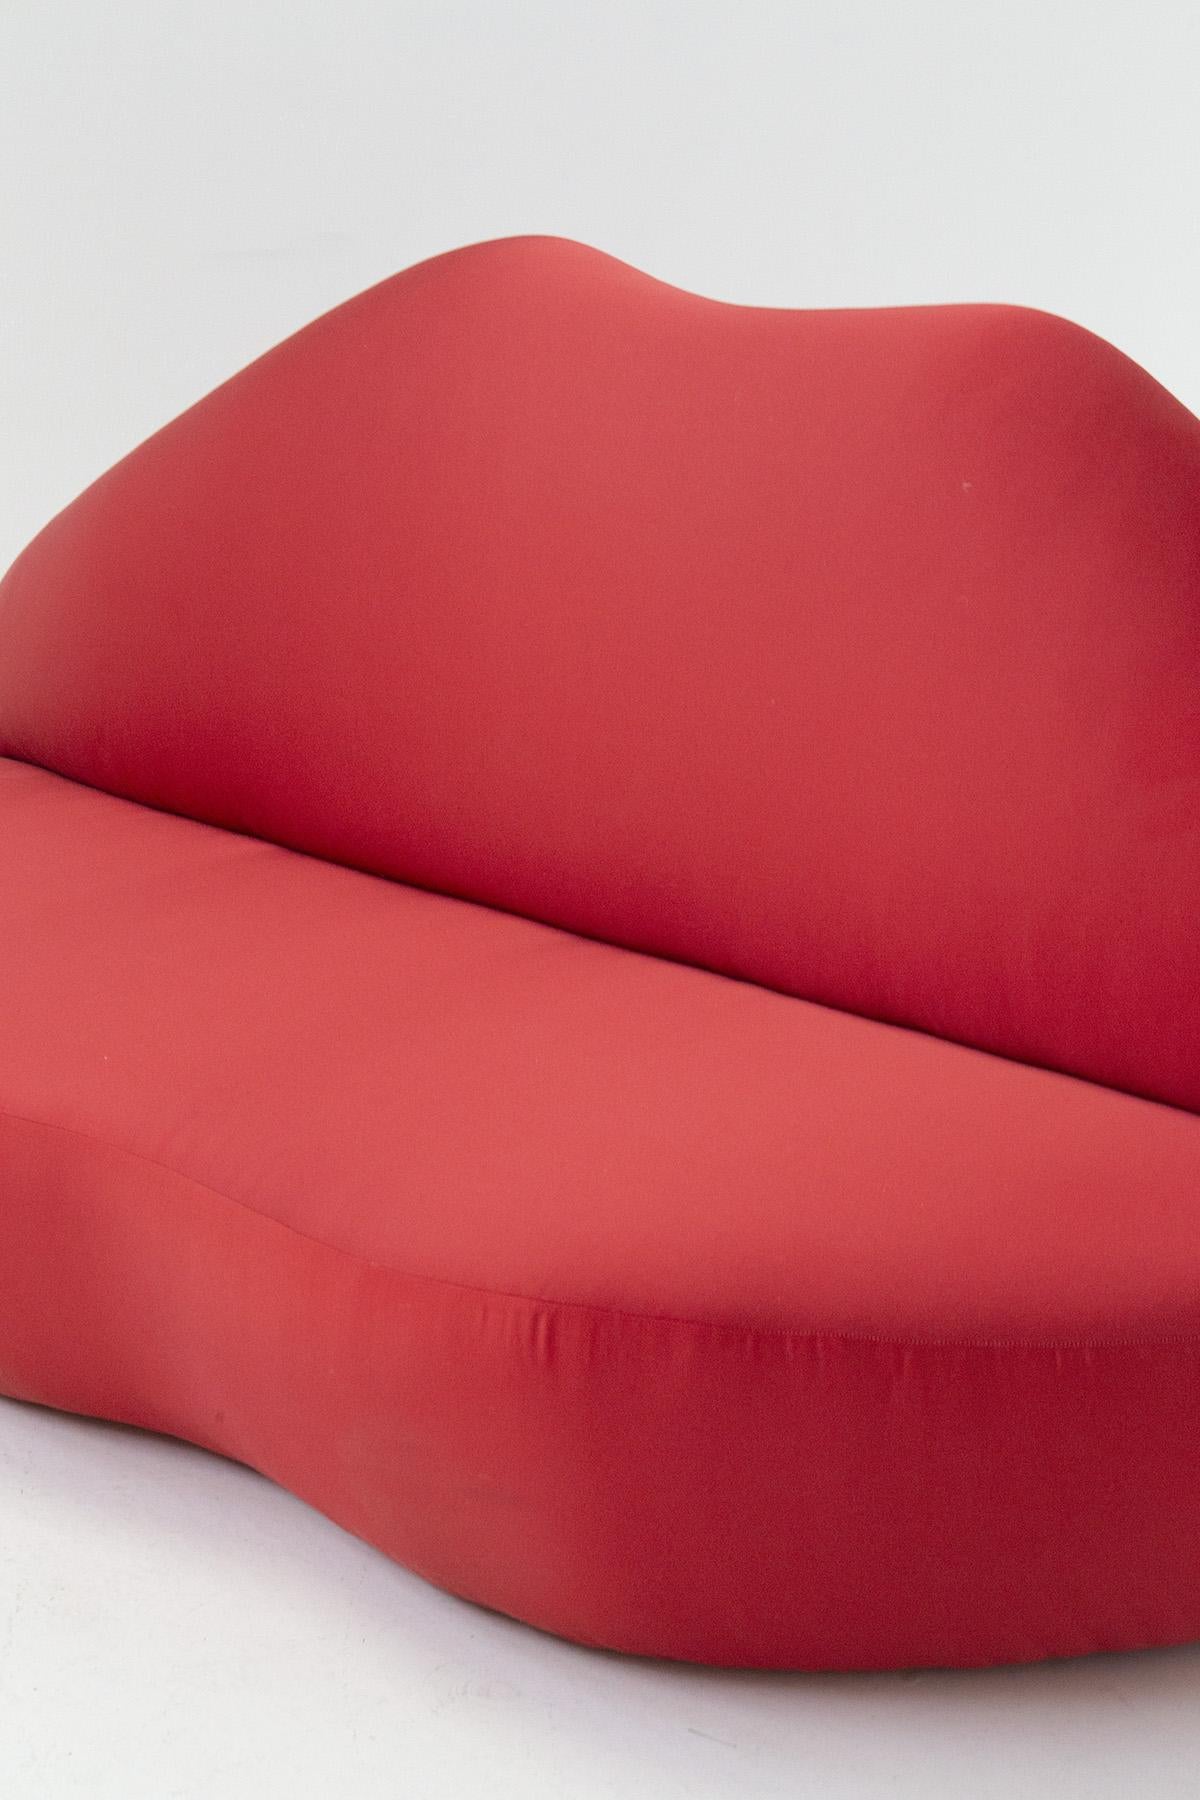 Iconic Italian Red Sofa Mod. Bocca Attributed. to Edra Studio 65 1